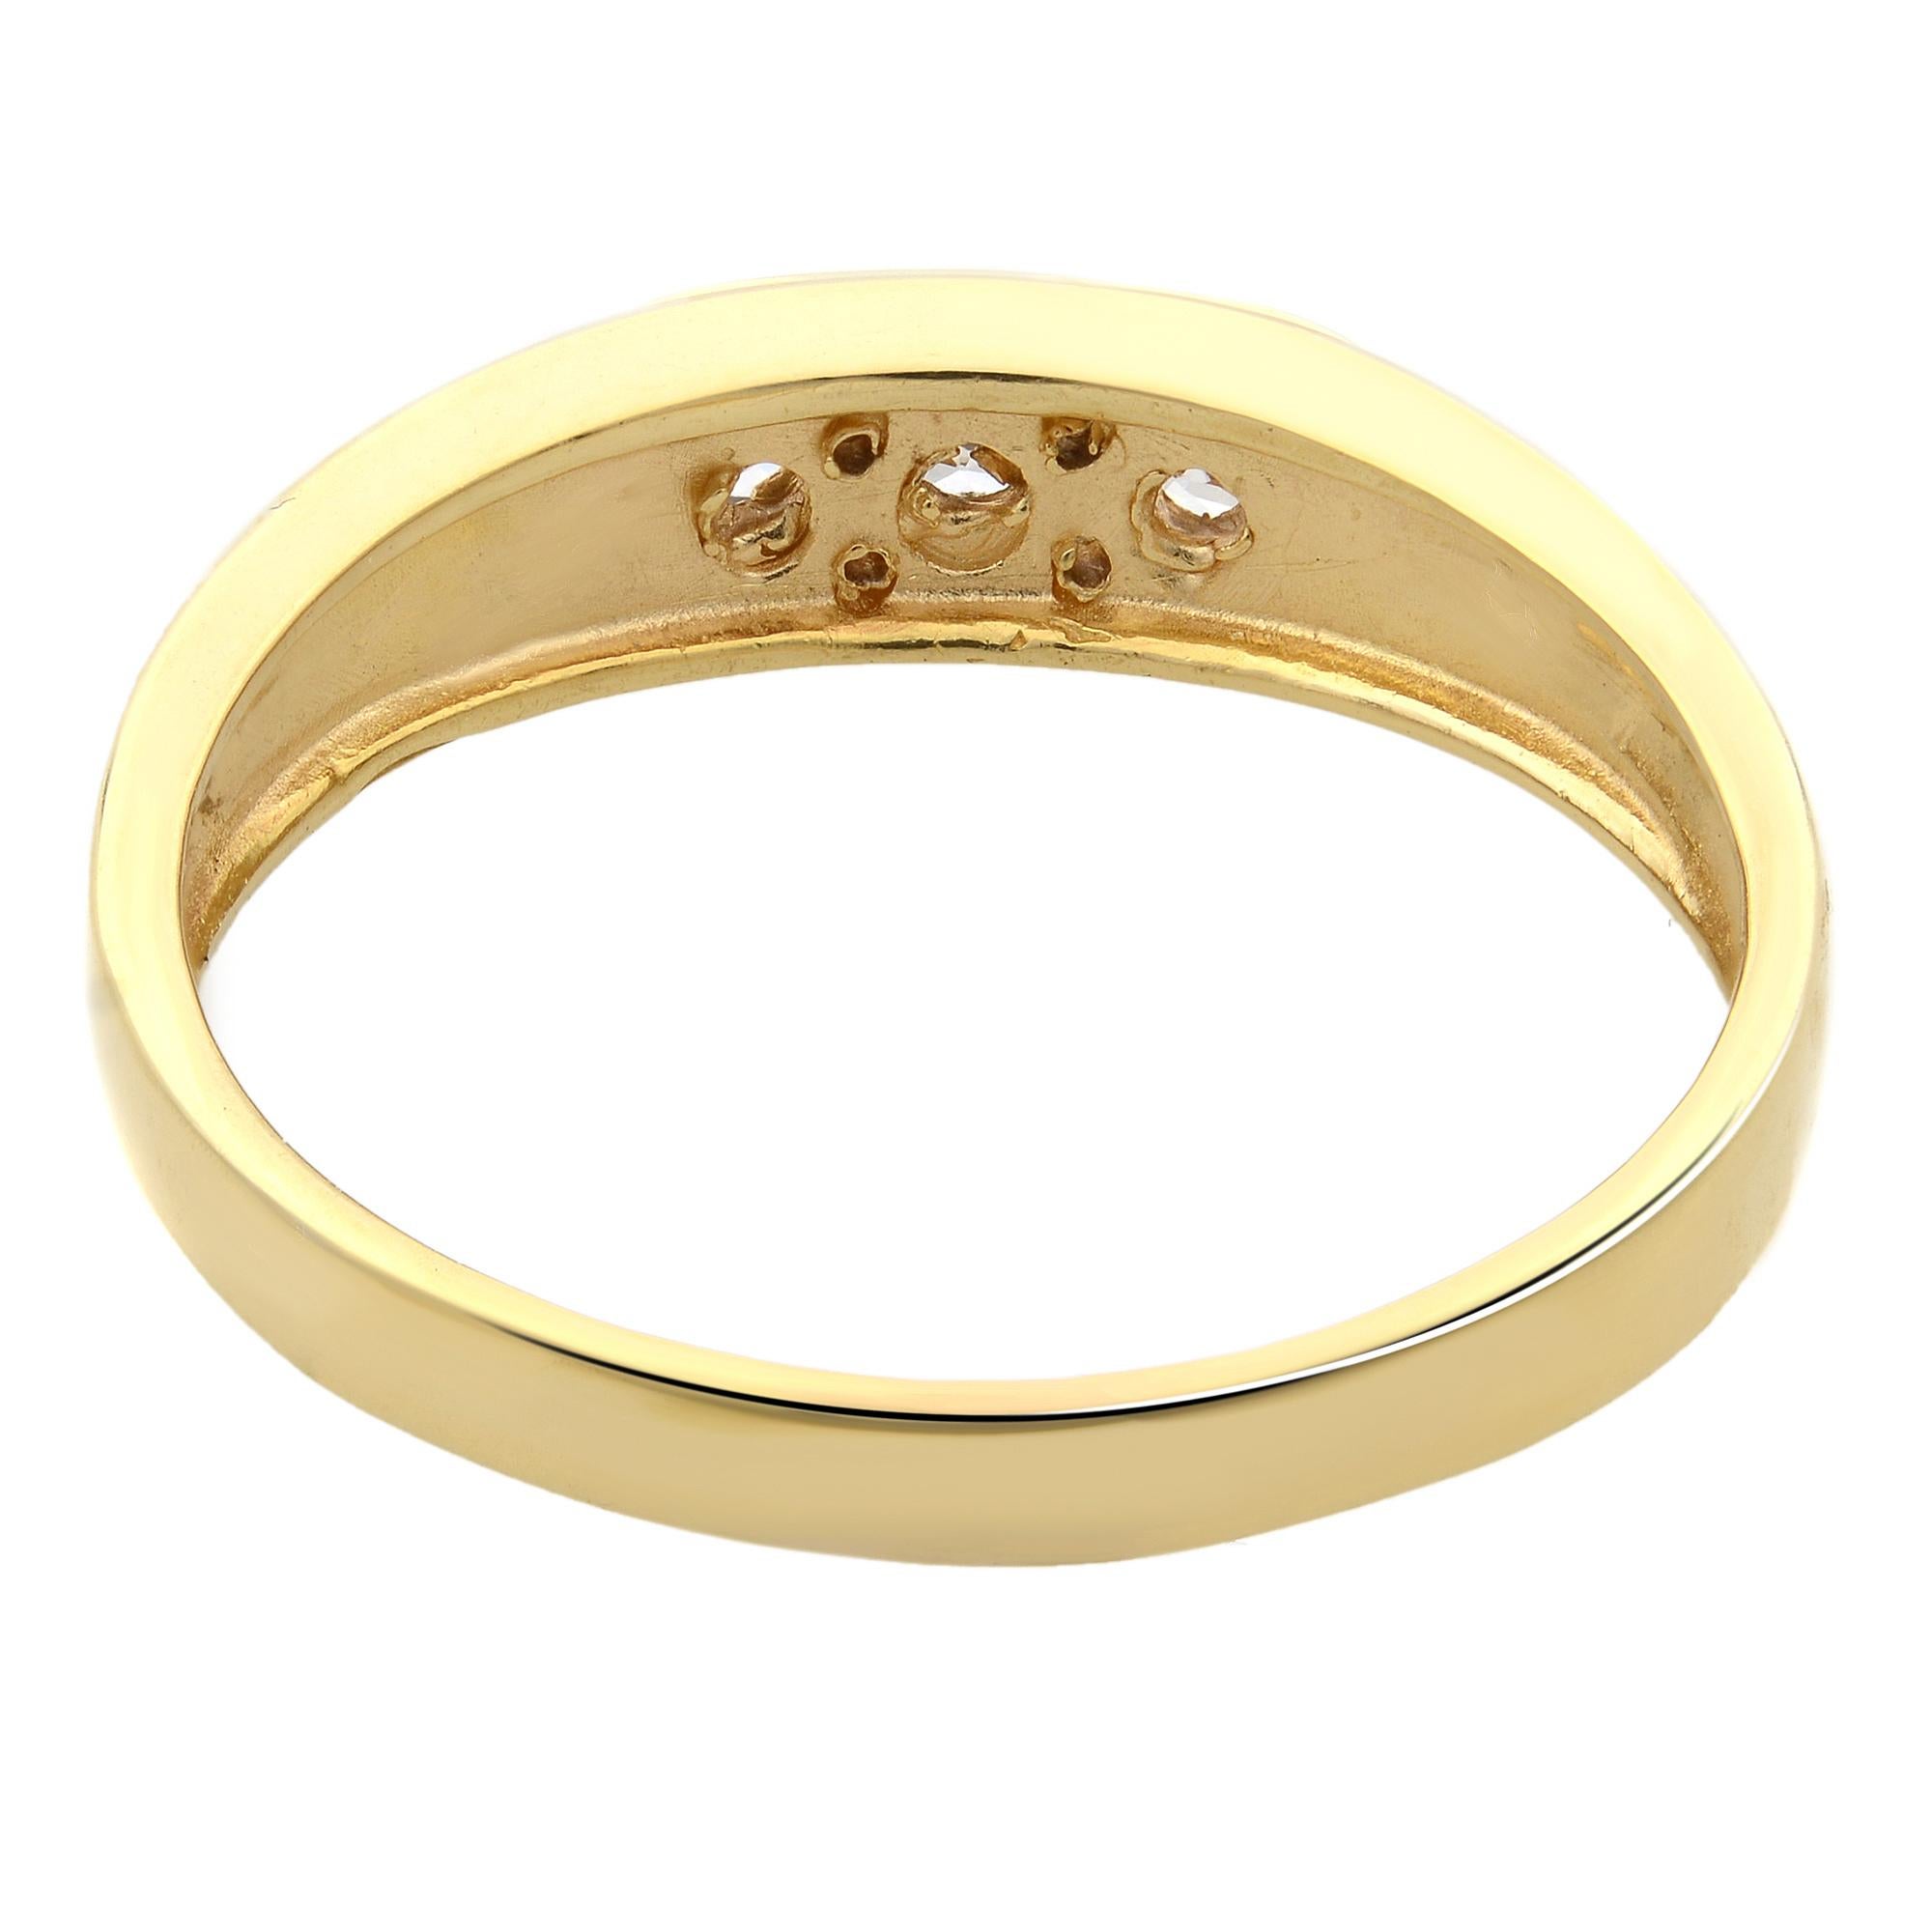 Modern Rachel Koen 0.25Cttw Diamond Ladies Band Ring 14K Yellow Gold Size 9.75 For Sale